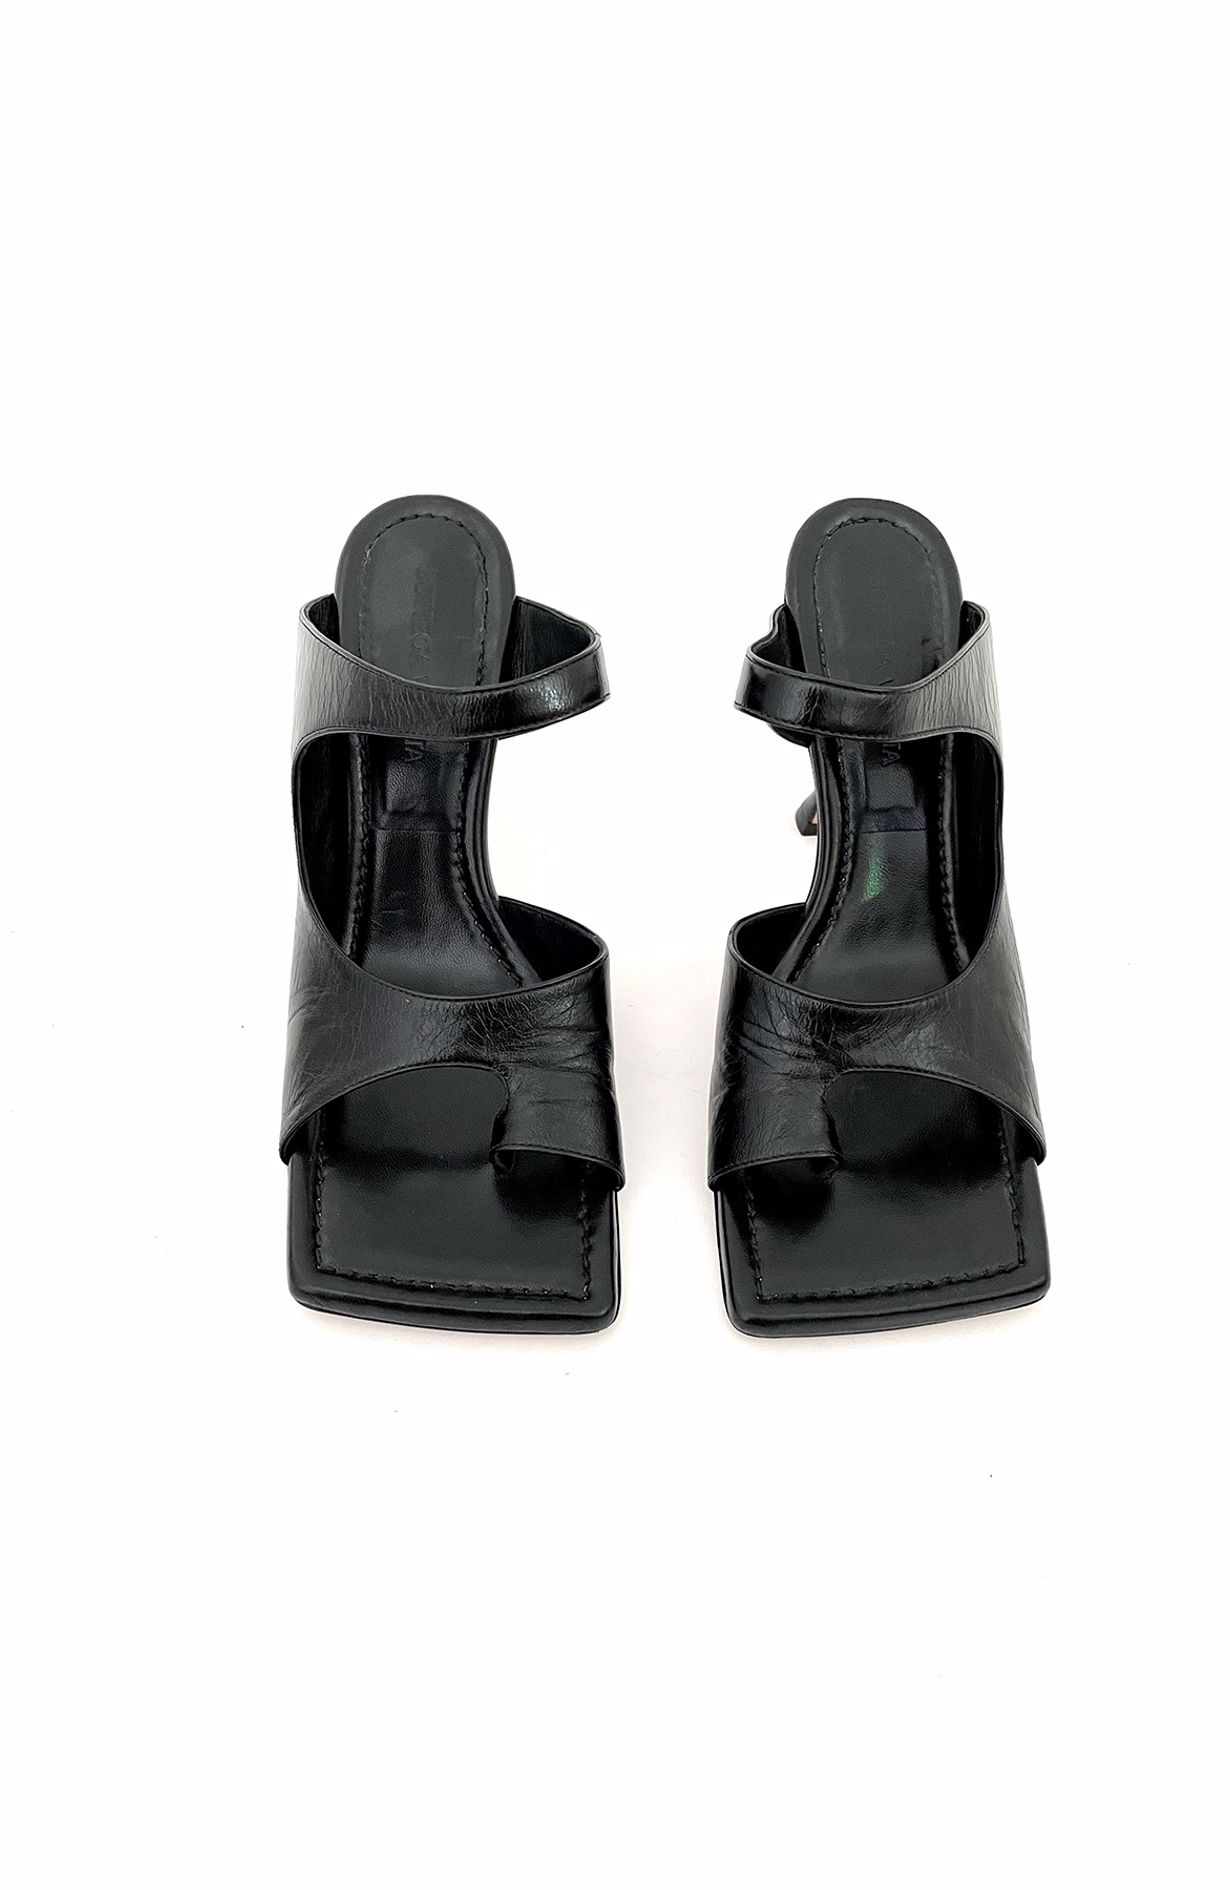 Bottega Veneta Black Heels - Size 37